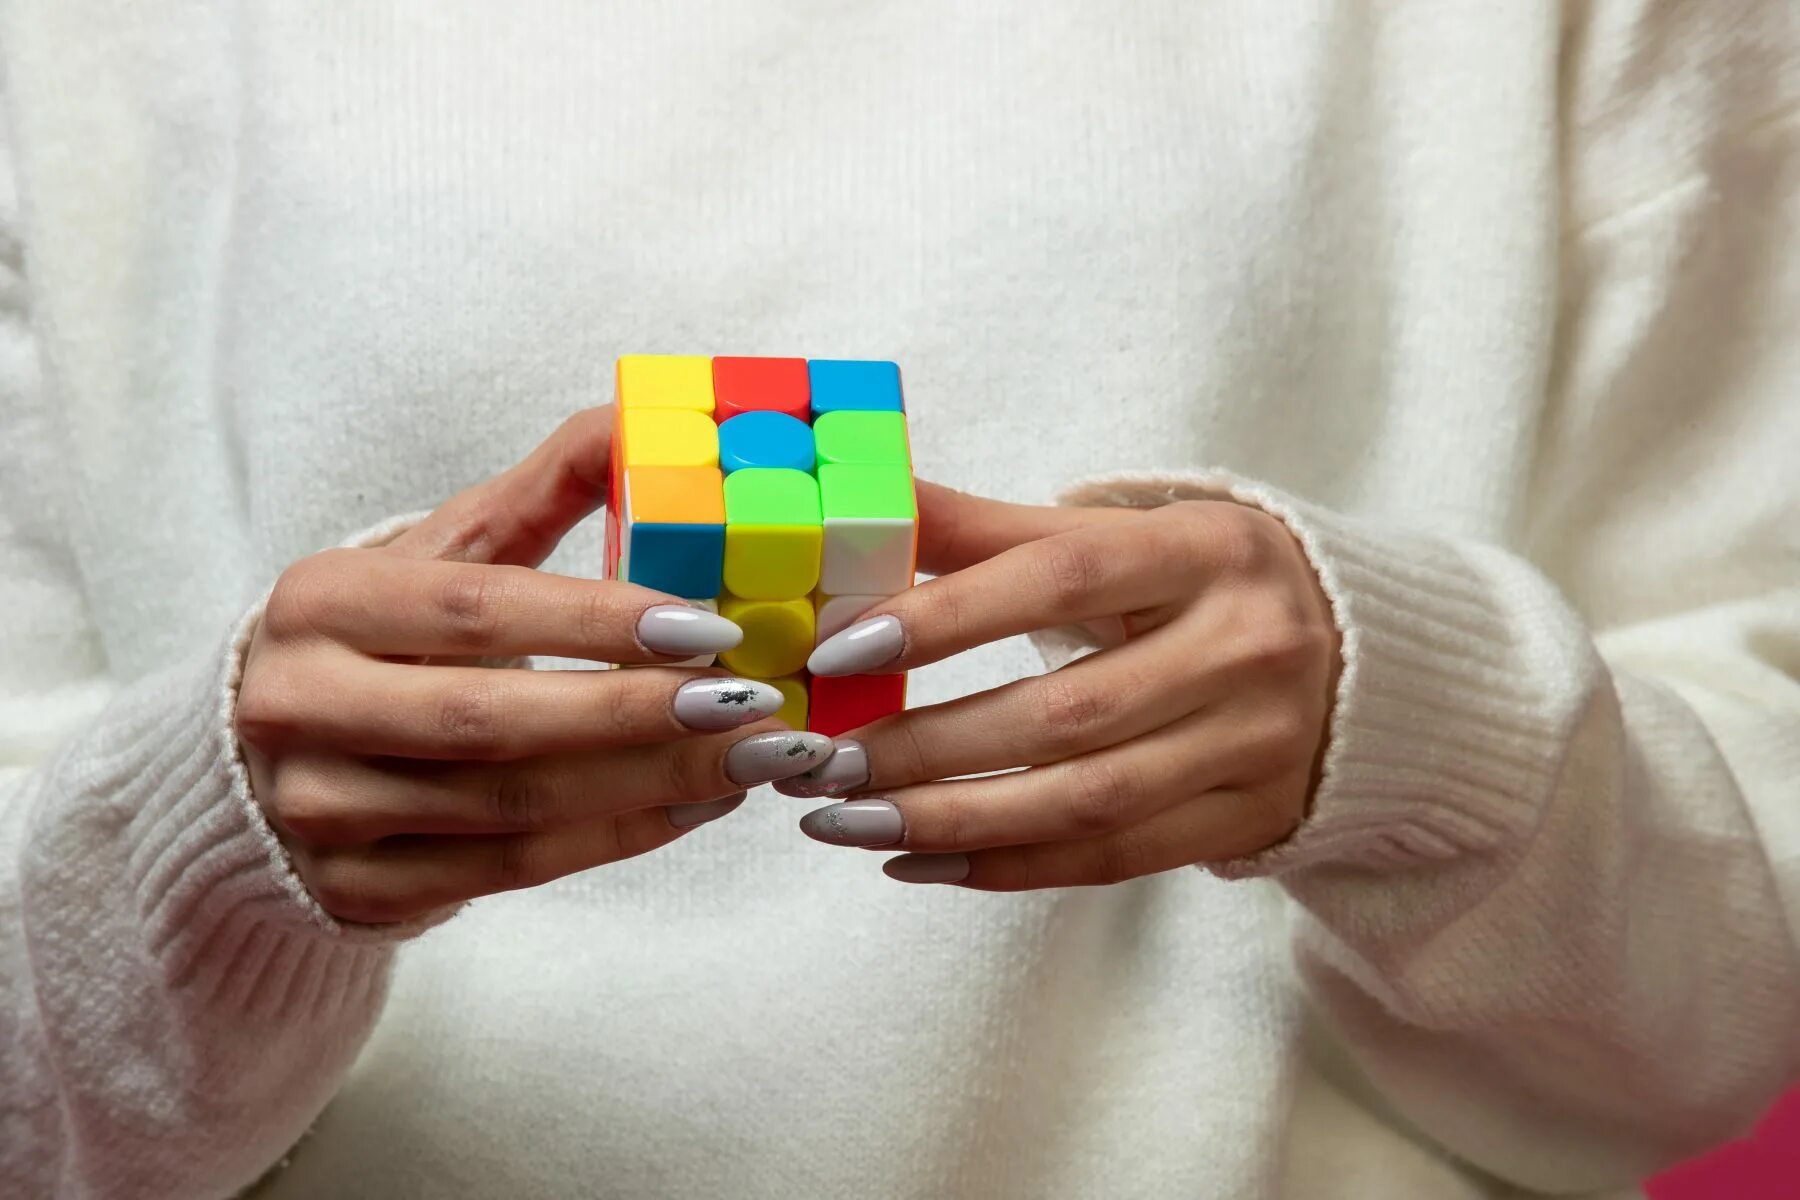 Включи кубики есть. Кубик Рубика в руках. Кубик Рубика в женских руках. Рука с кубиками. Девушка с кубиком Рубика.